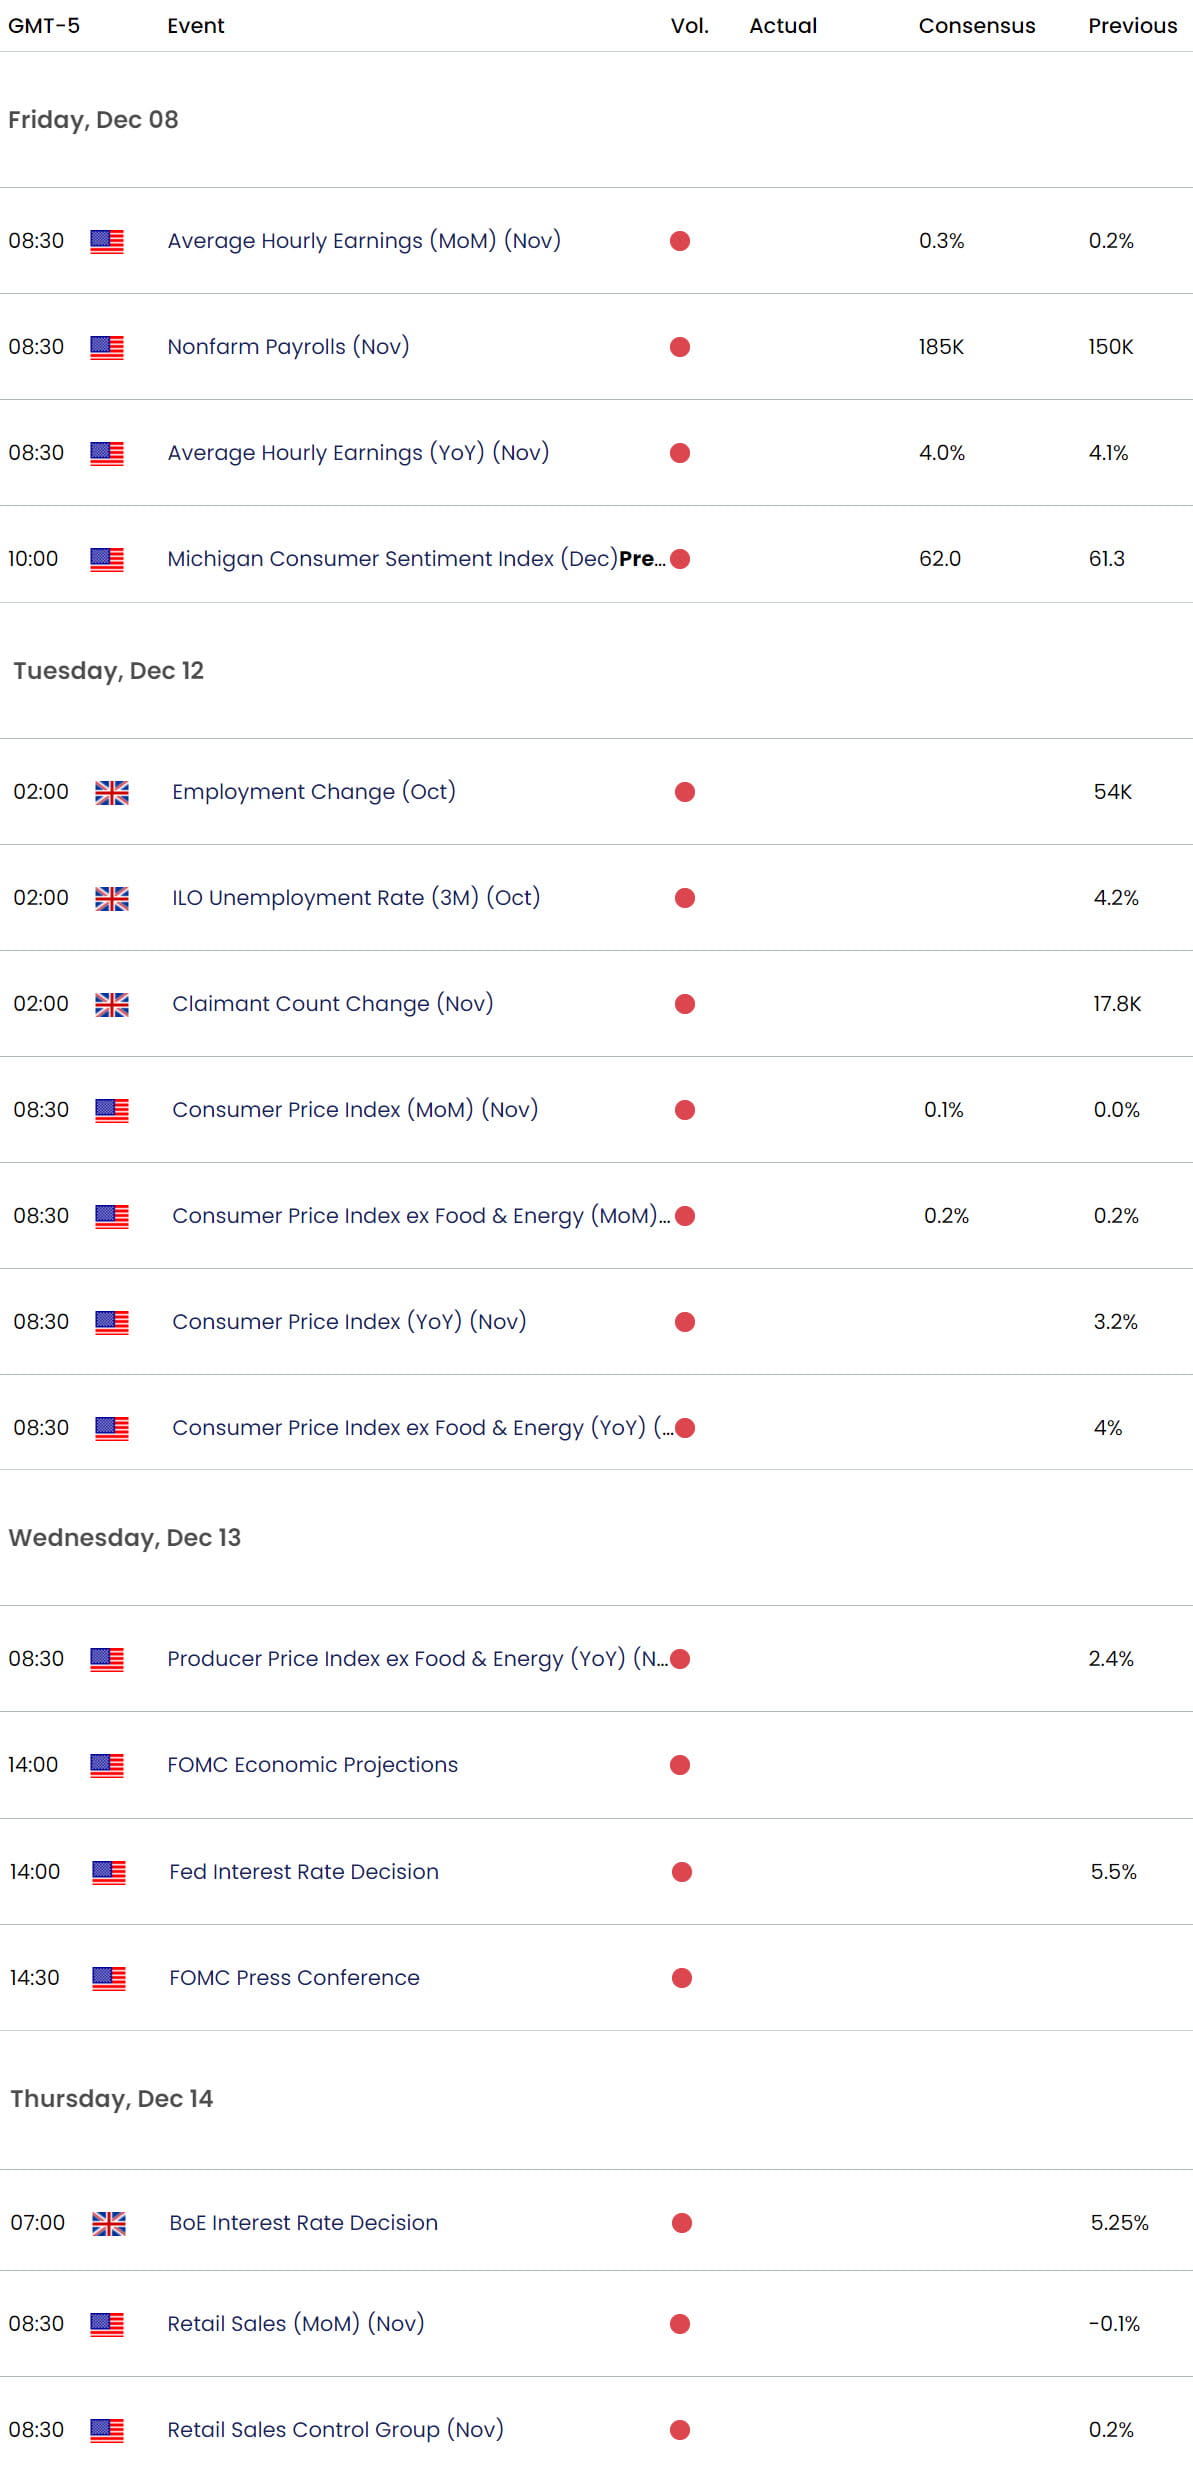 UK US Economic Calendar  GBP USD Key Data Releases British Pound US Dollar Weekly Event Risk GBPUSD